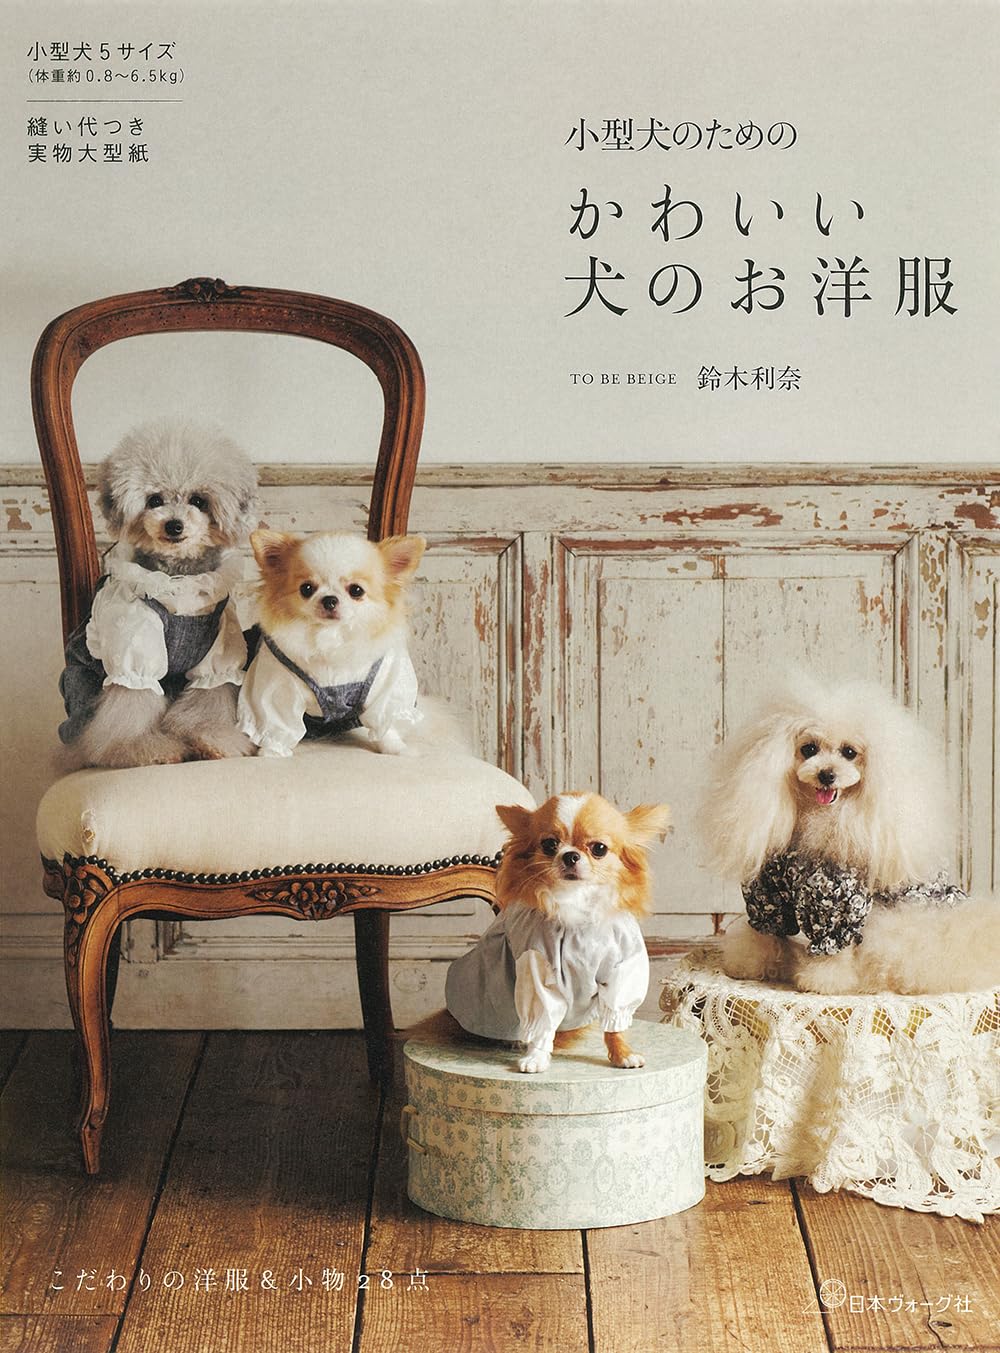 NV70756 小型犬のためのかわいい犬のお洋服 著)鈴木利奈/日本ヴォーグ社(冊)